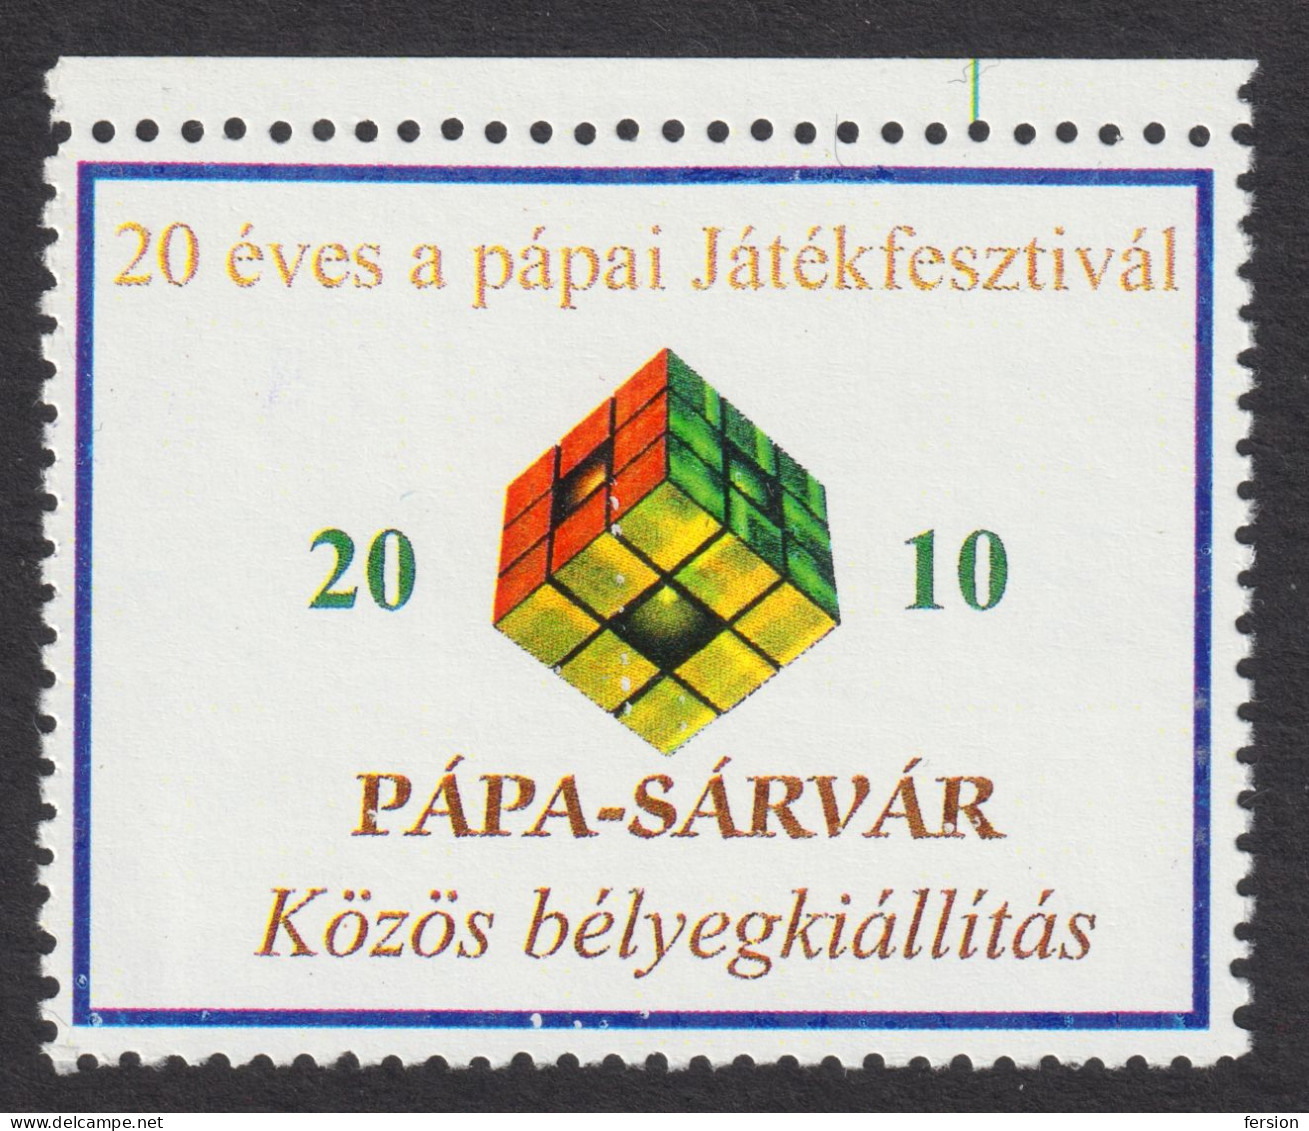 Rubik's Rubik Magic Cube TOY PLAY - Pápa / Sárvár Game Festival - LABEL CINDERELLA VIGNETTE Hungary - Sin Clasificación